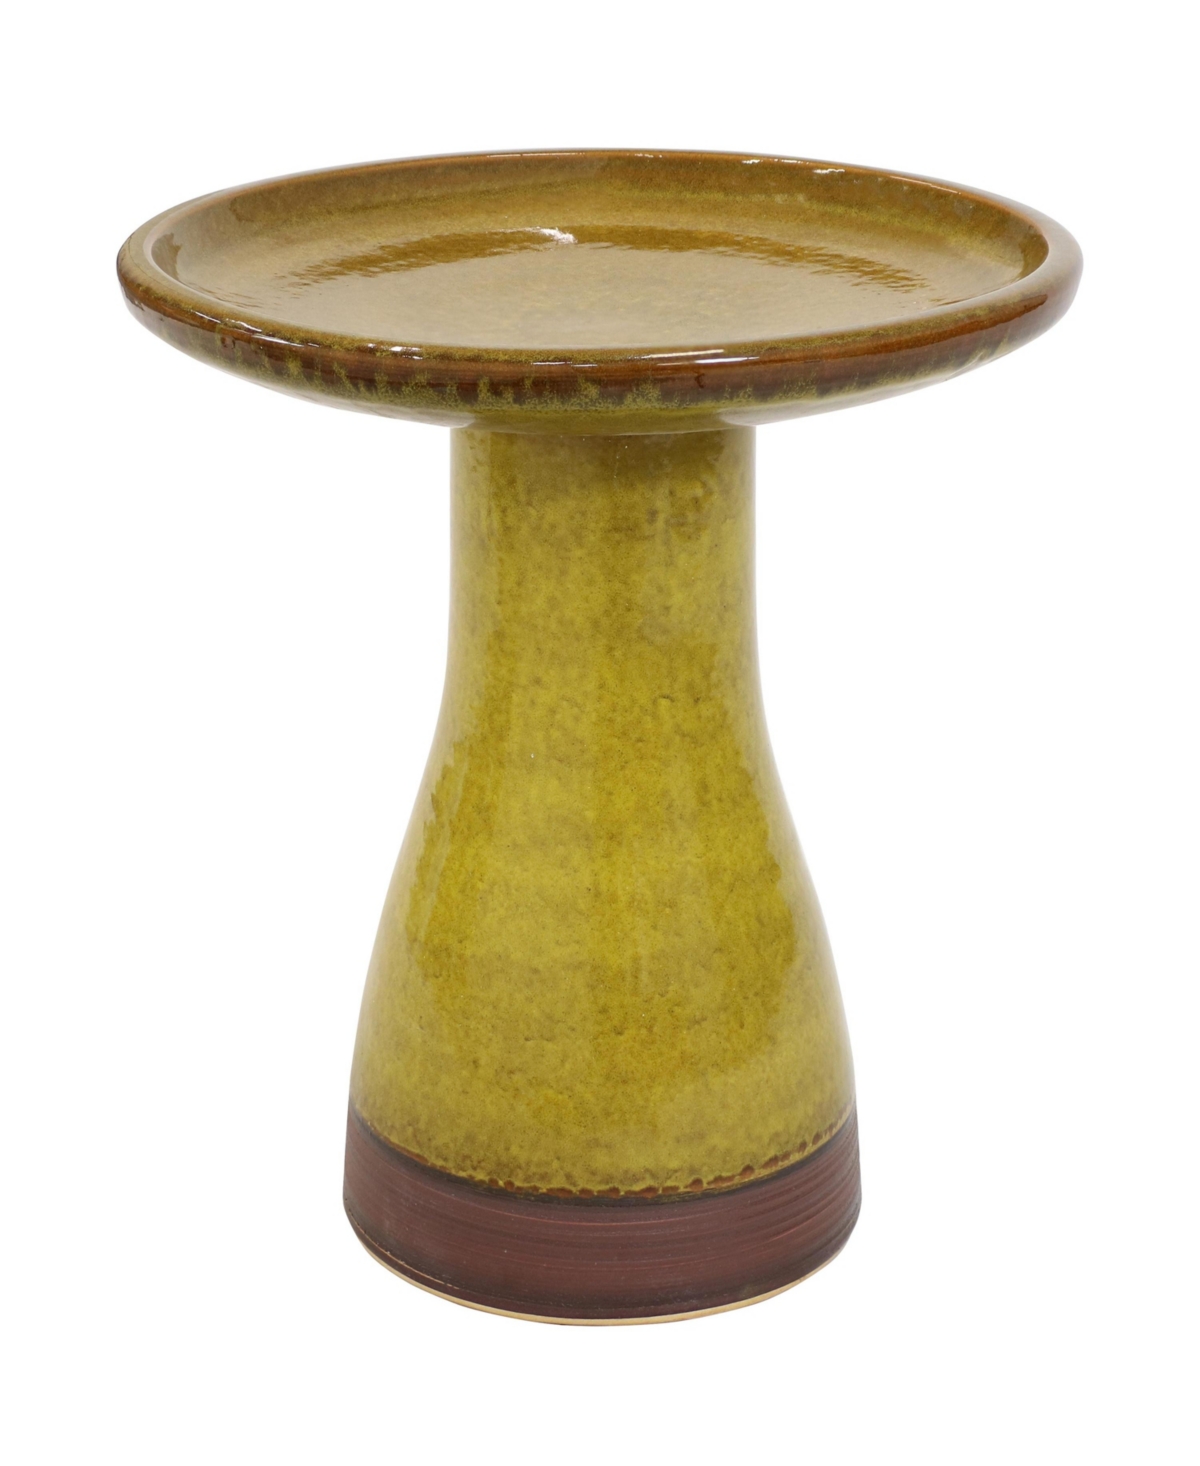 Duo-Tone Glazed Ceramic Bird Bath - 20.5 in - Cognac Yellow - Dark yellow